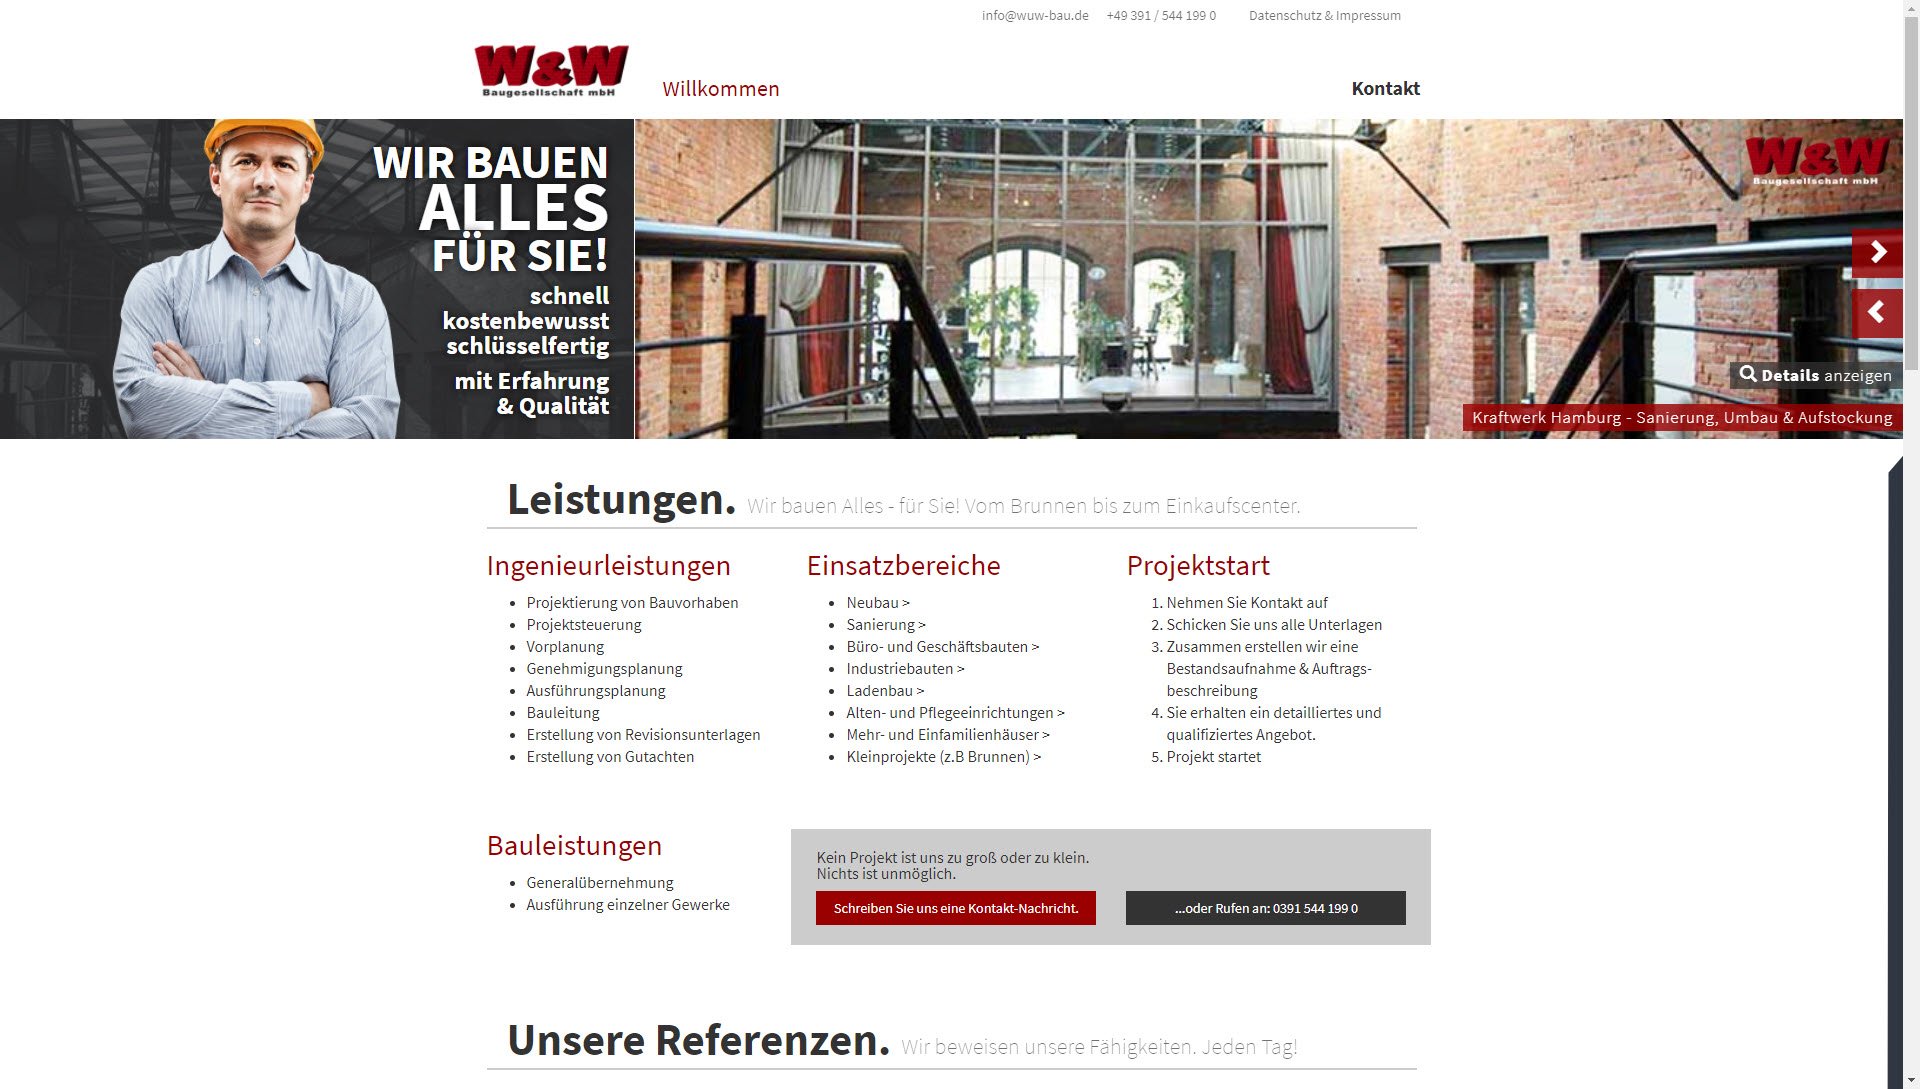 W & W Baugesellschaft mbH